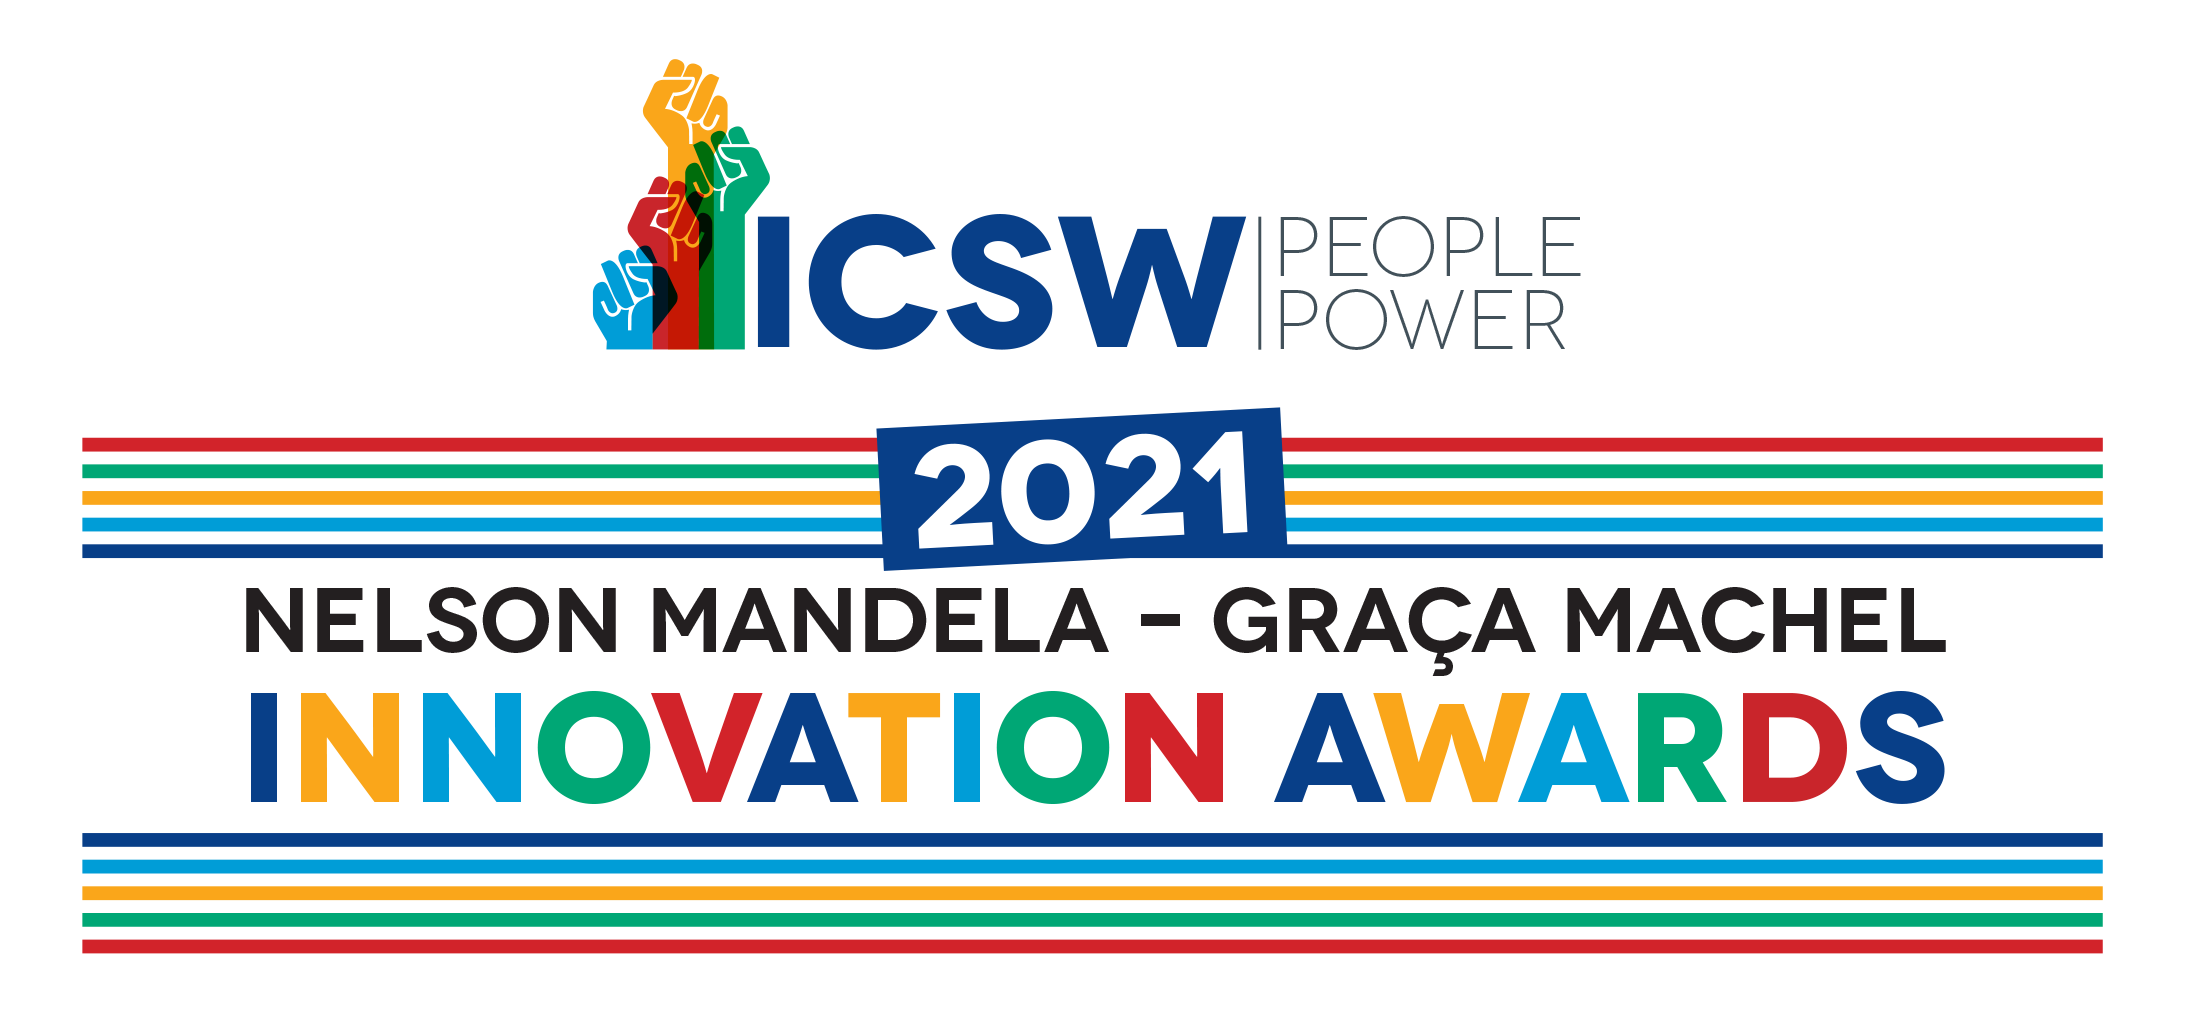 Civicus Nelson Mandela - Graça Machel Innovation Awards offers $5,000 prize